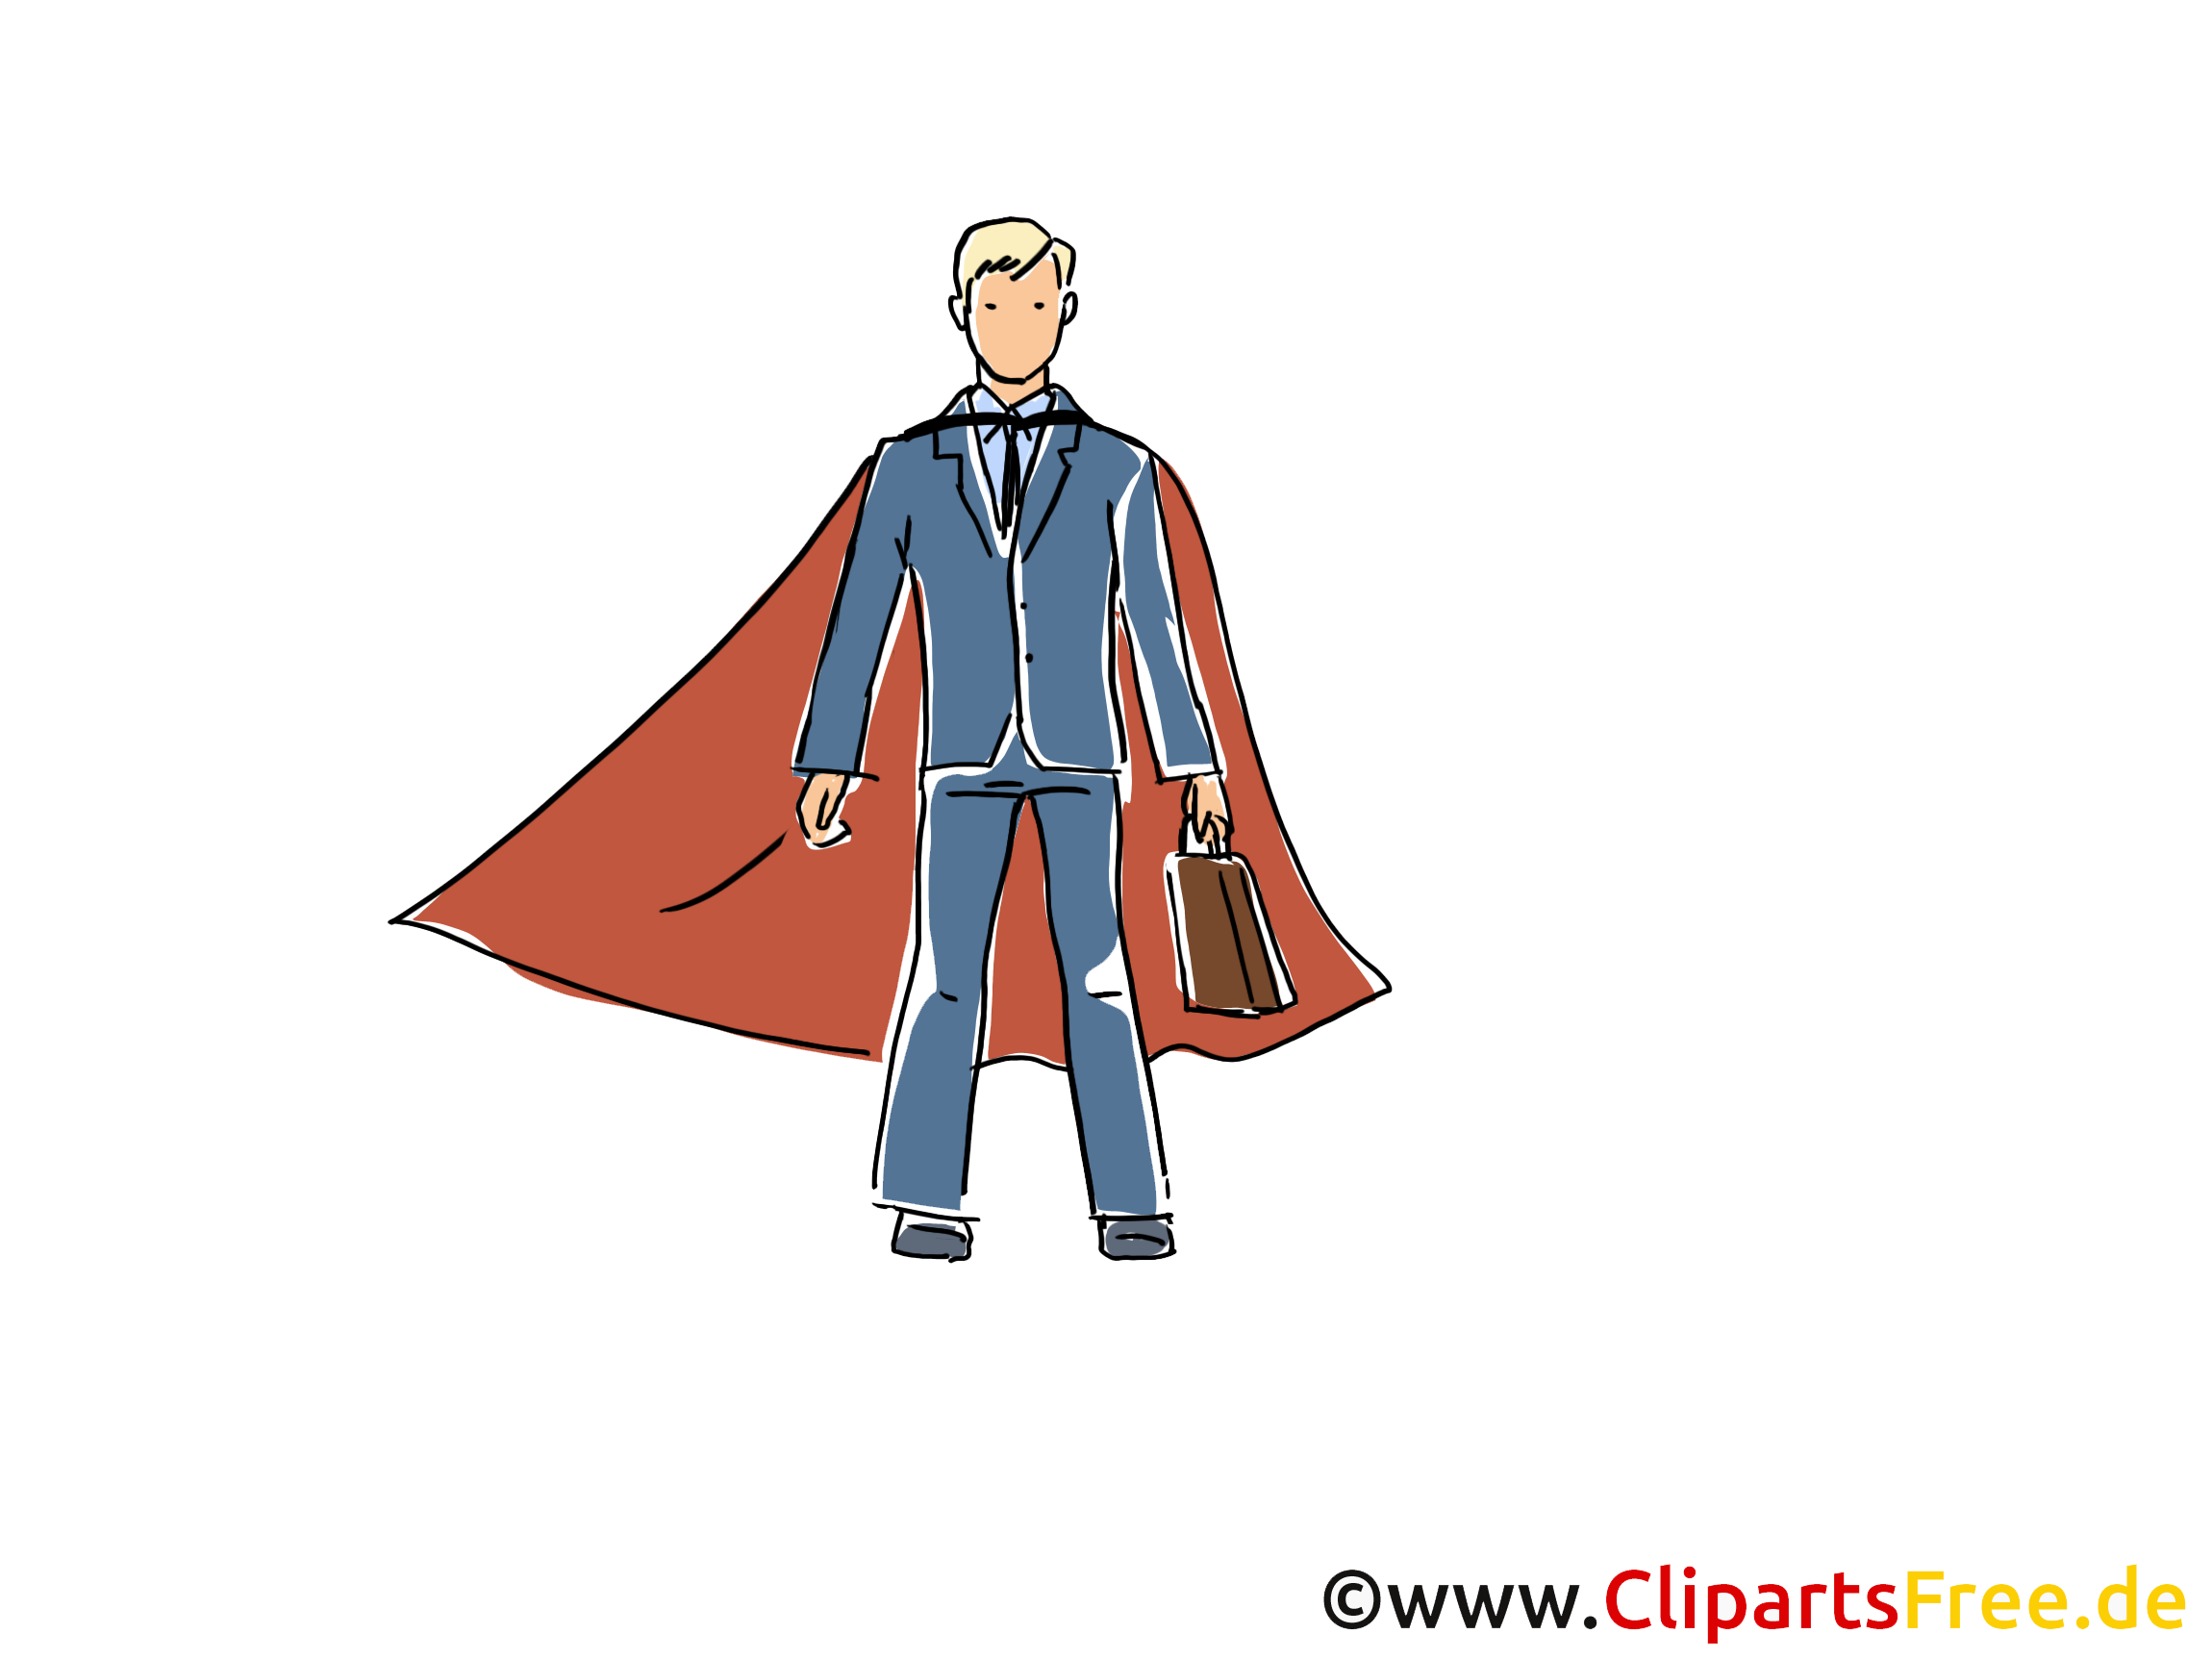 Bildtitel  Superman Sales Manager Clipart Image Cartoon